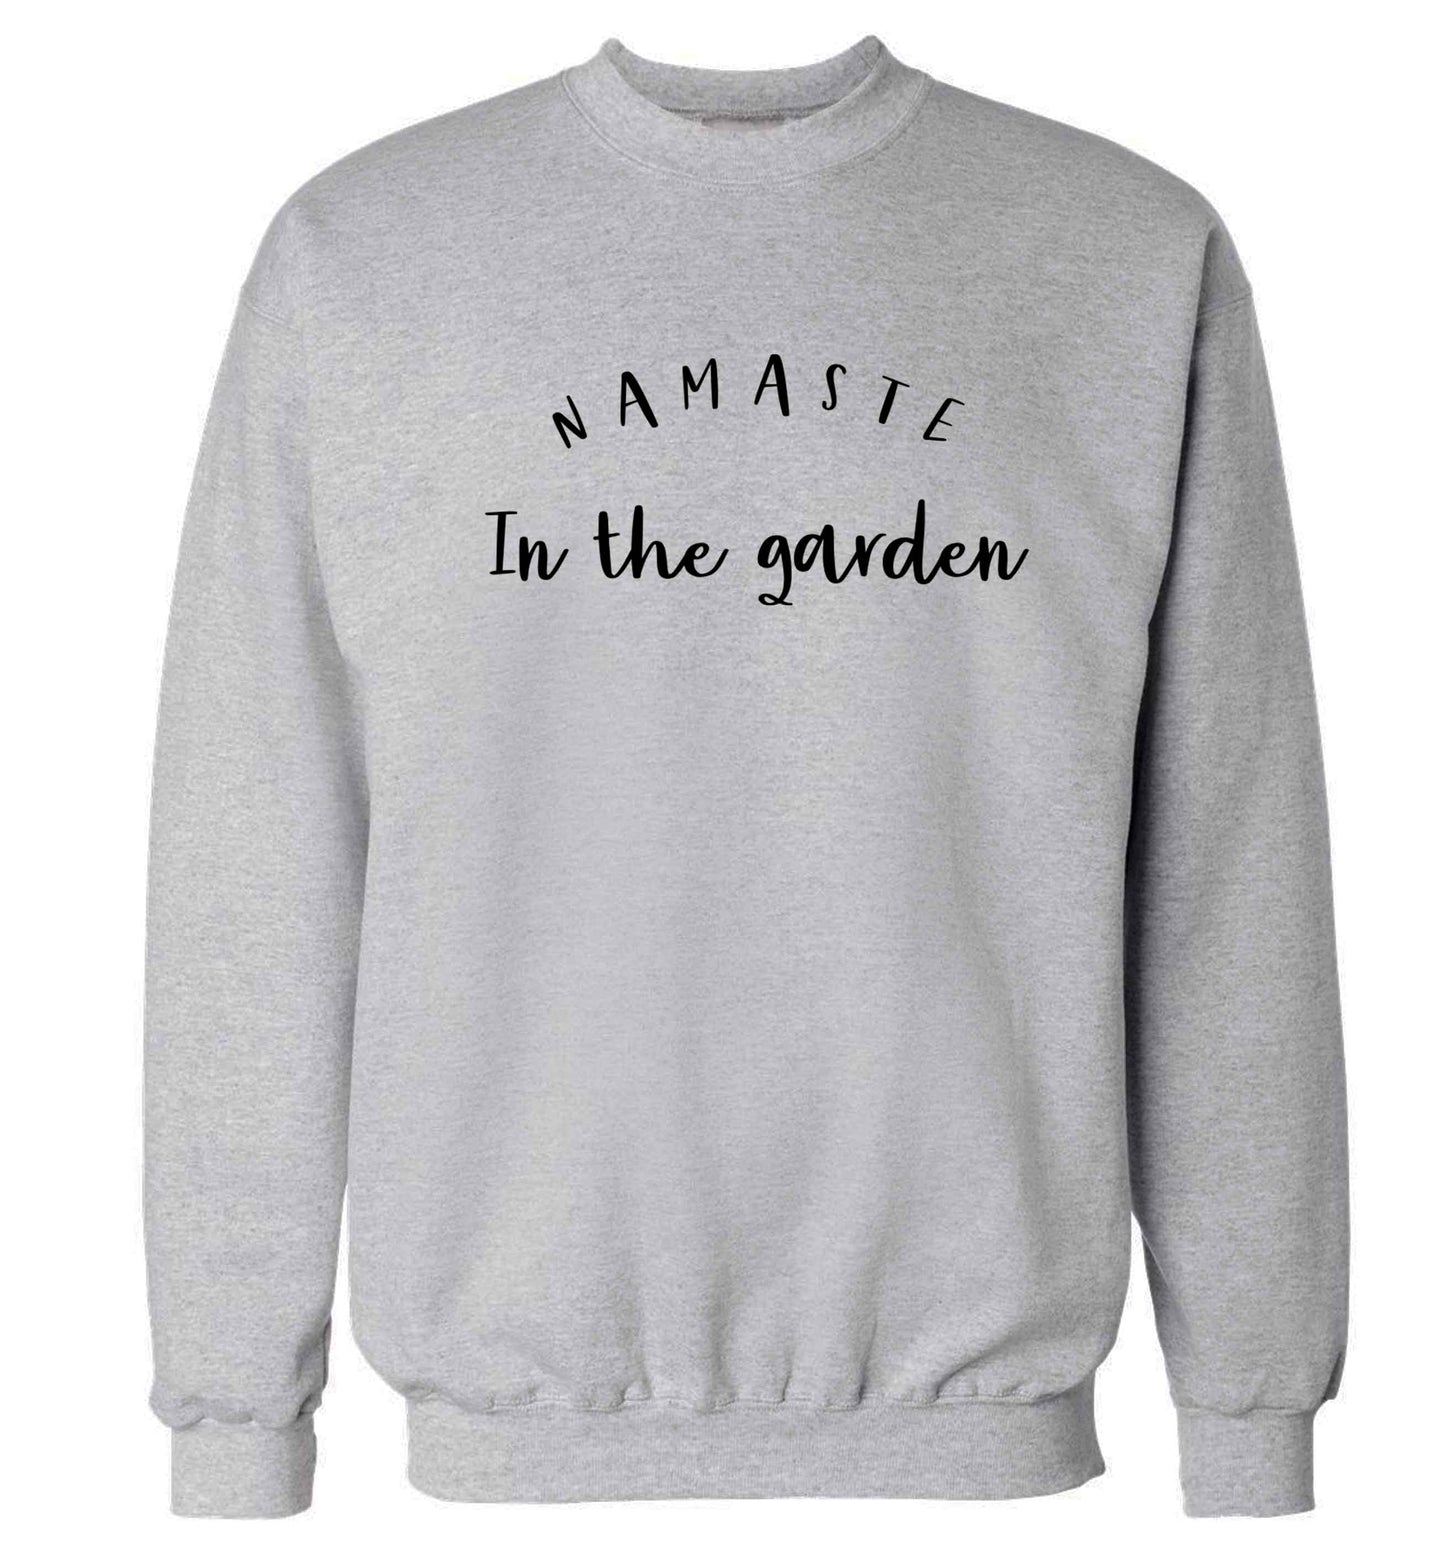 Namaste in the garden Adult's unisex grey Sweater 2XL